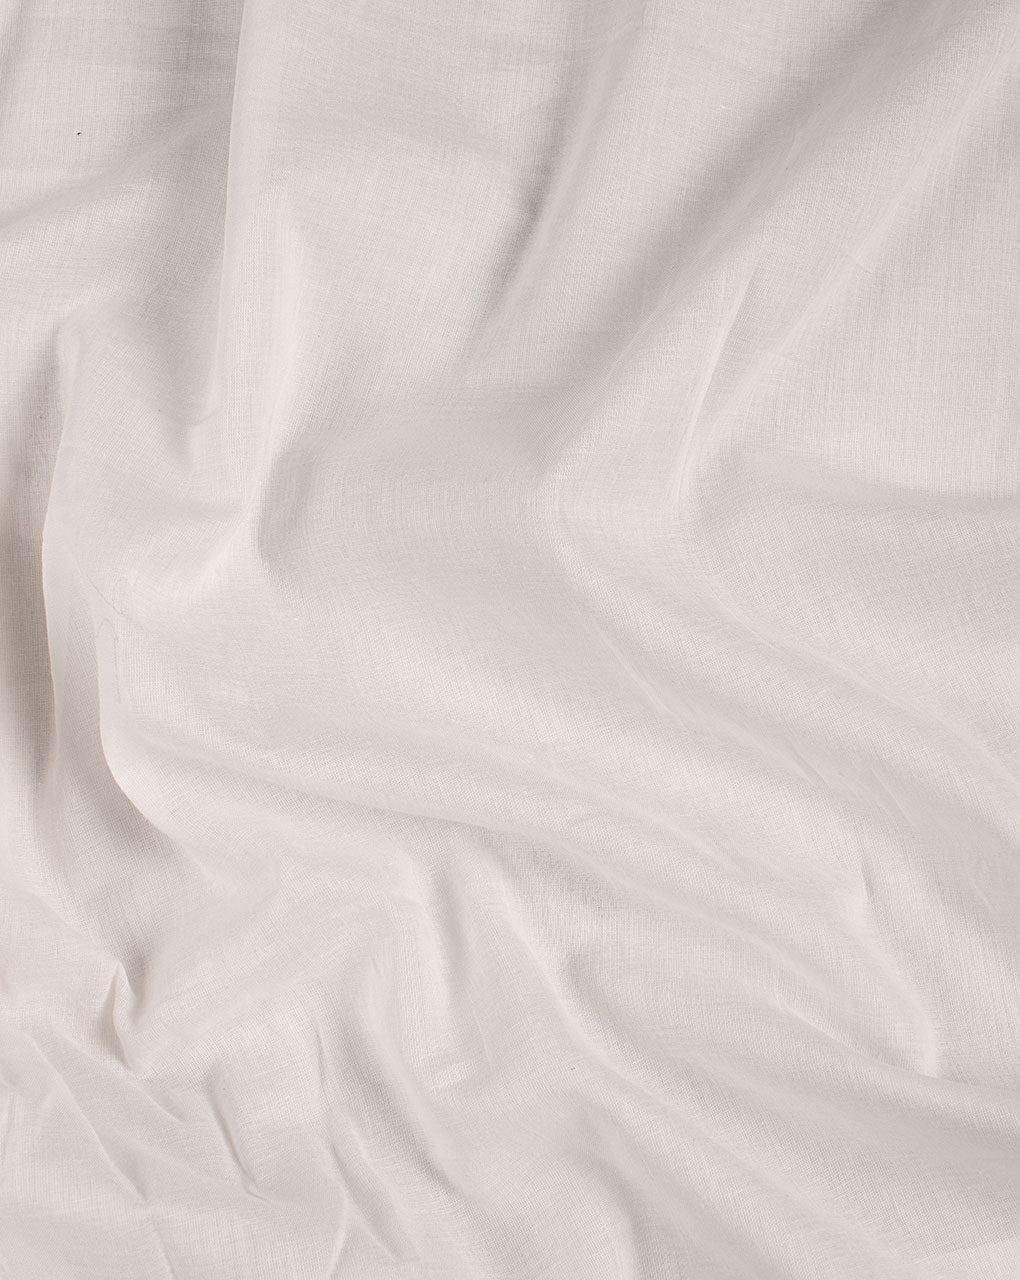 White Plain Cotton Fabric